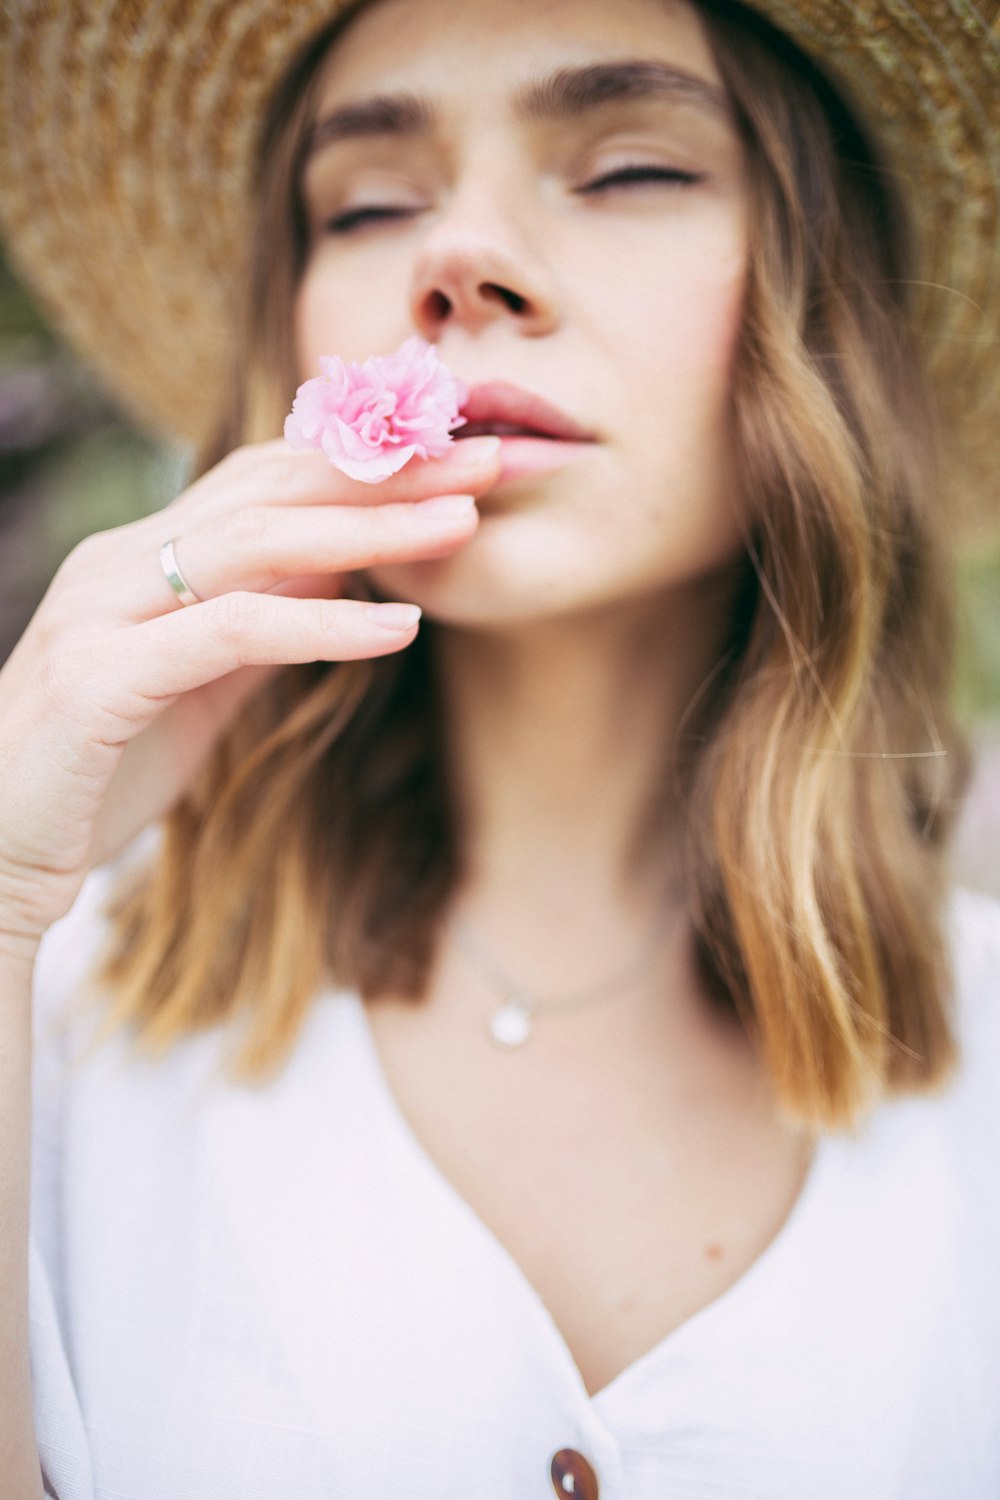 femme sentant la fleur rose